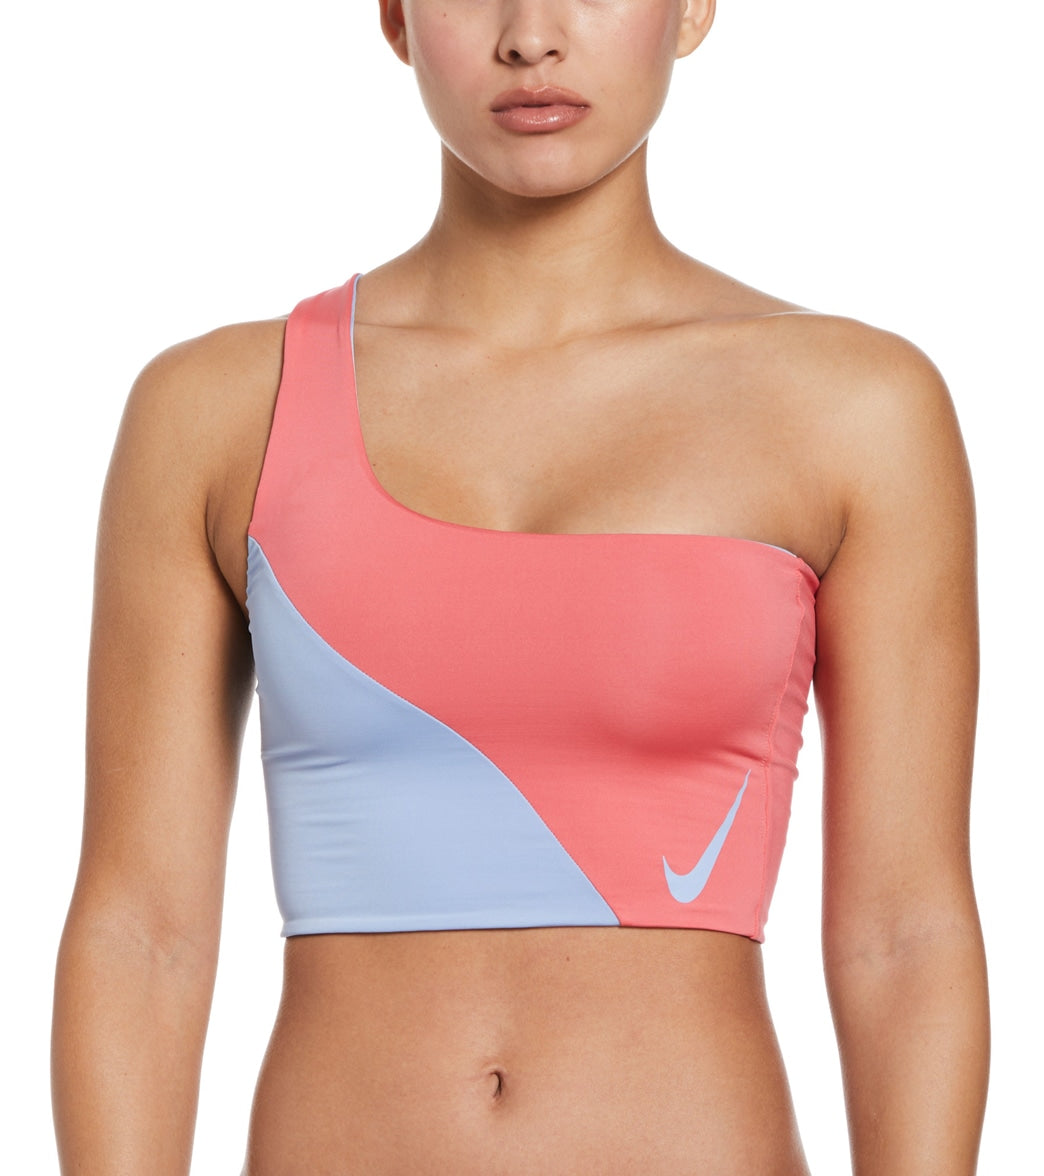 Nike Women's Colorblock 3 in 1 Bikini Top at SwimOutlet.com